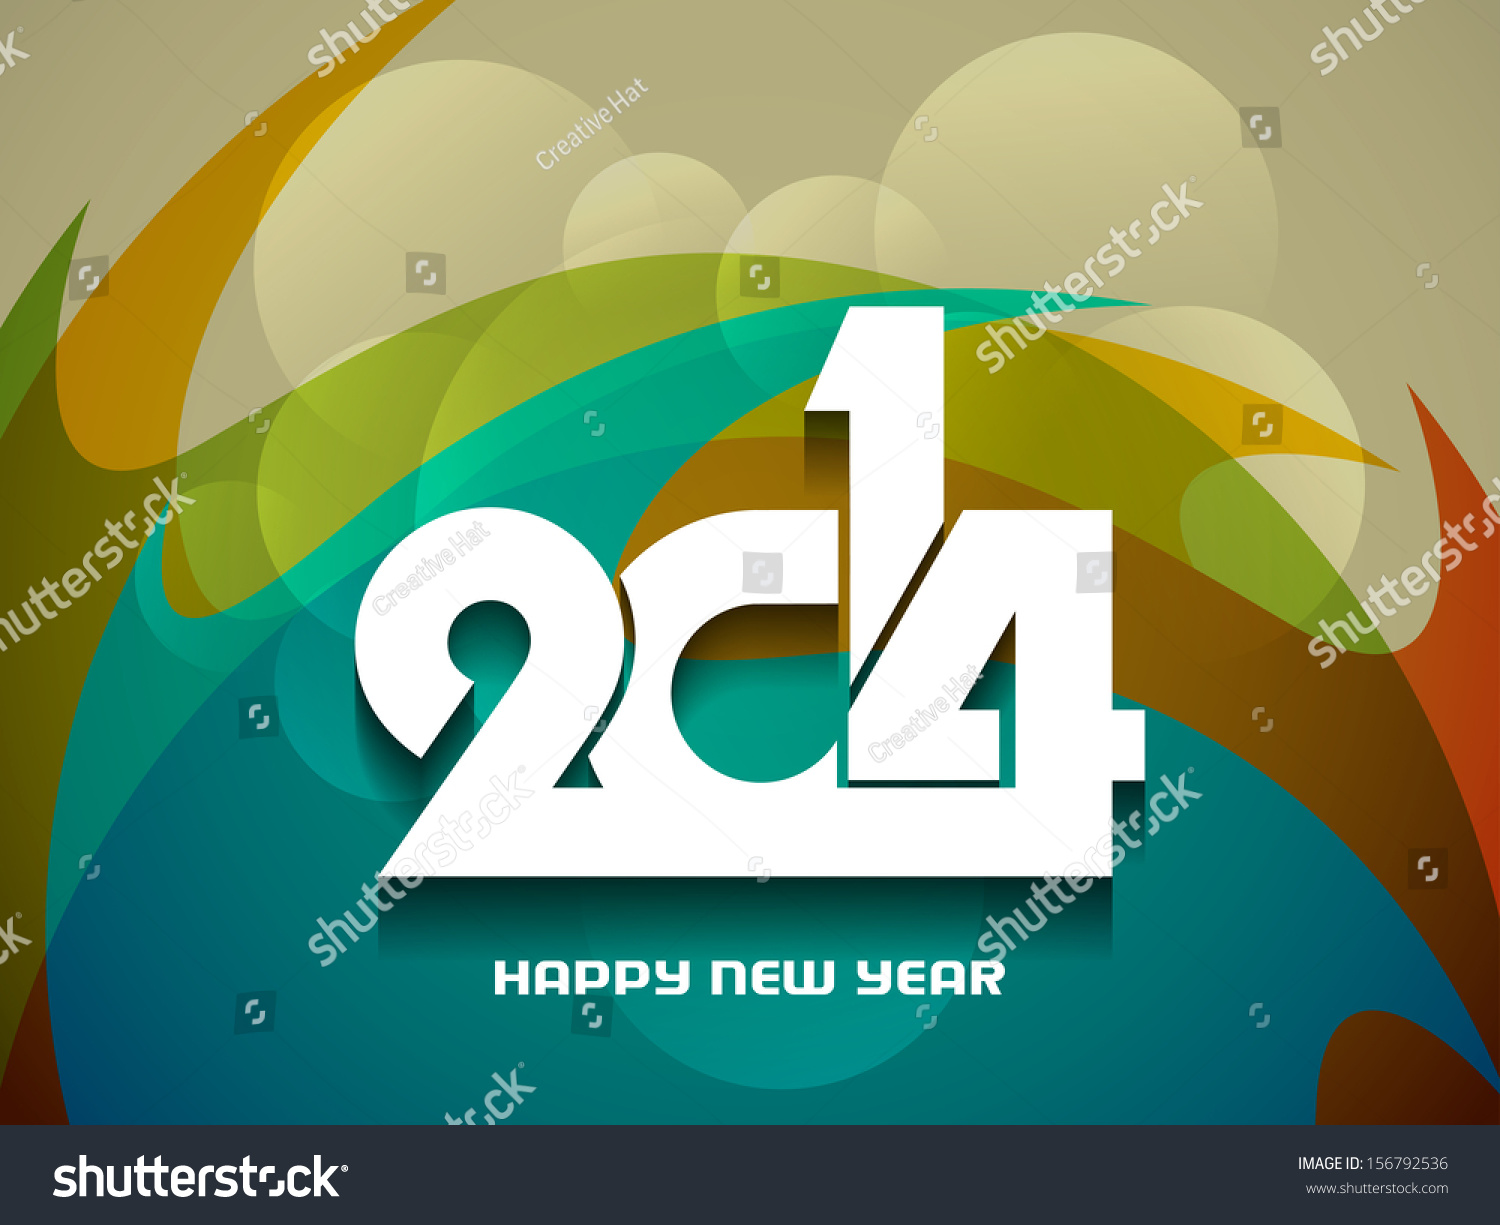 elegant colorful background design for happy new year 2014 vector illustration